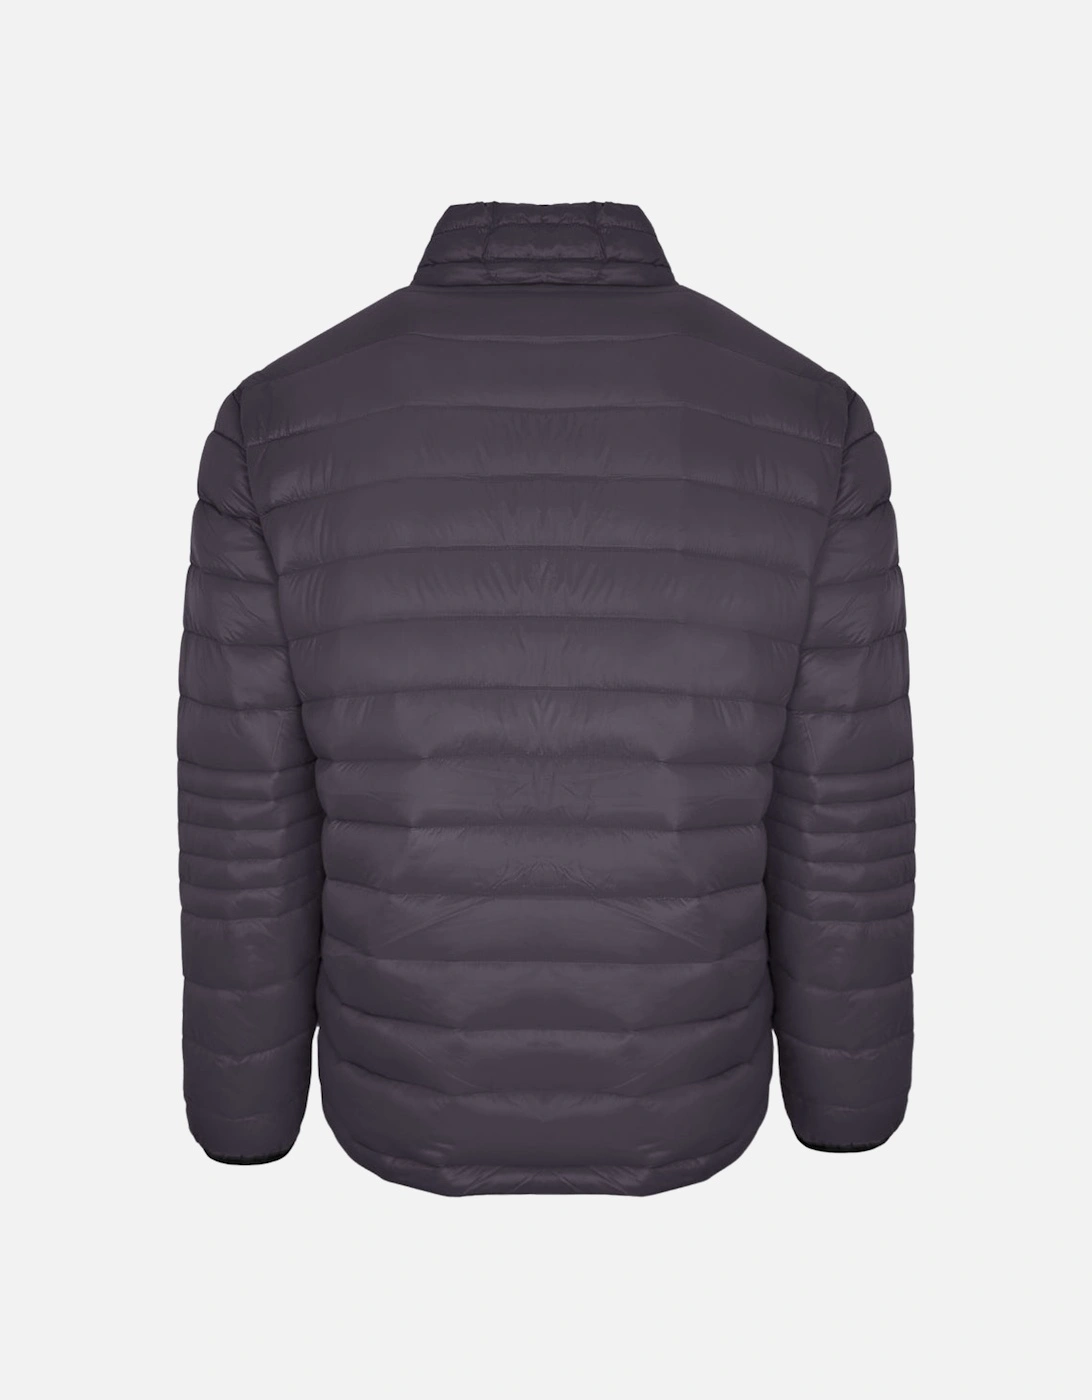 Plein Sport Plain Padded Grey Jacket